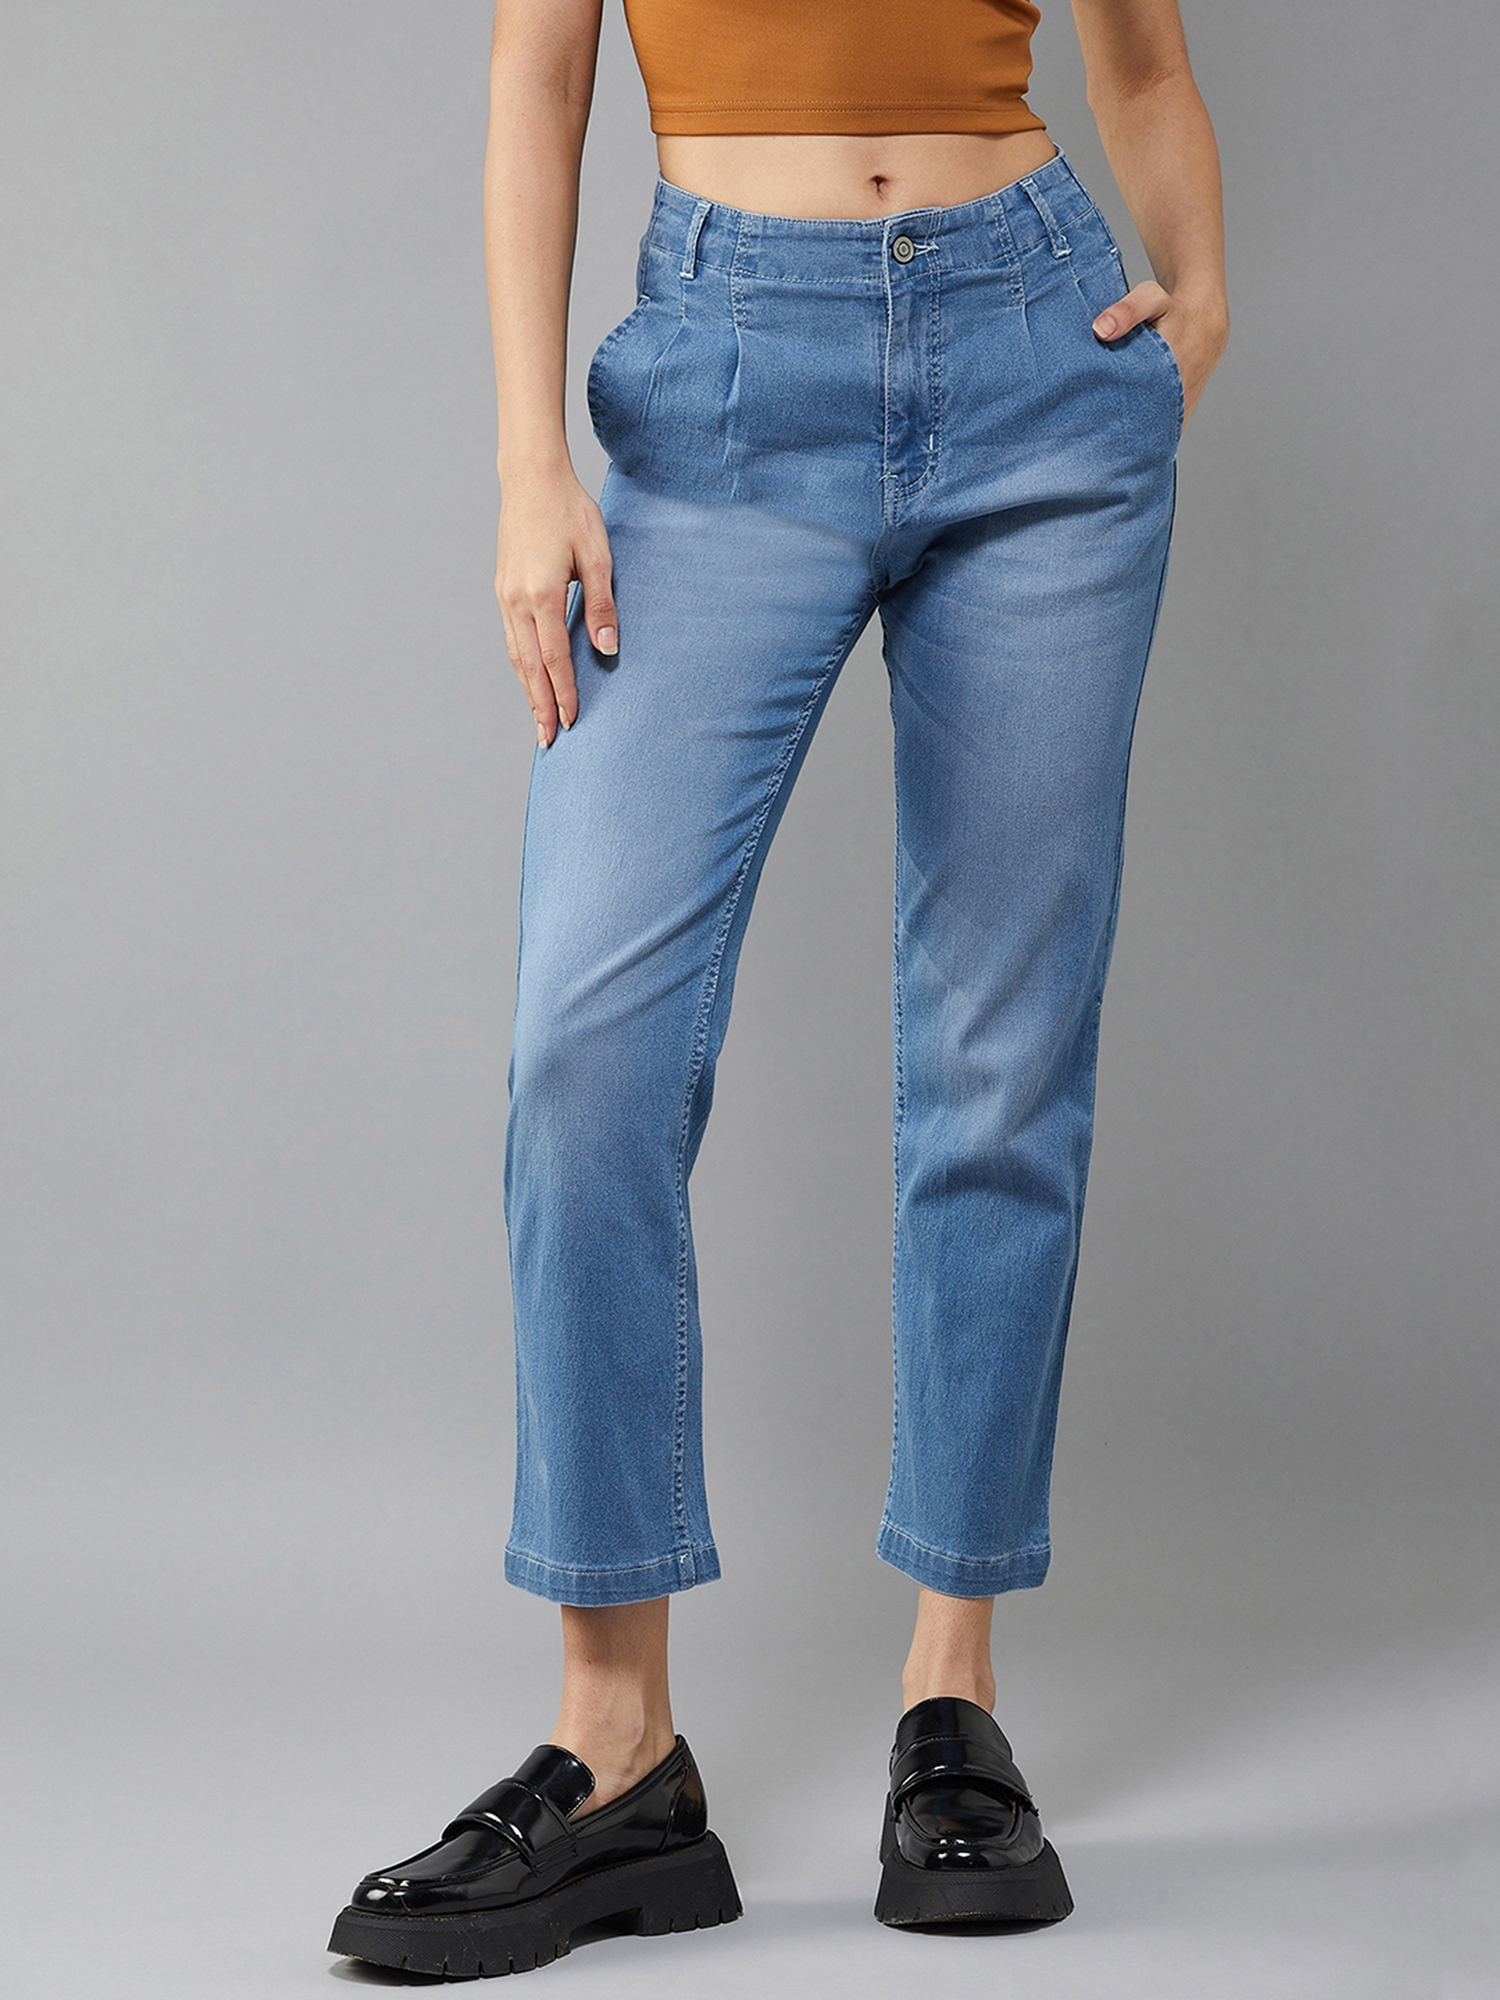 Wide High Jeans - Denim blue - Ladies | H&M IN